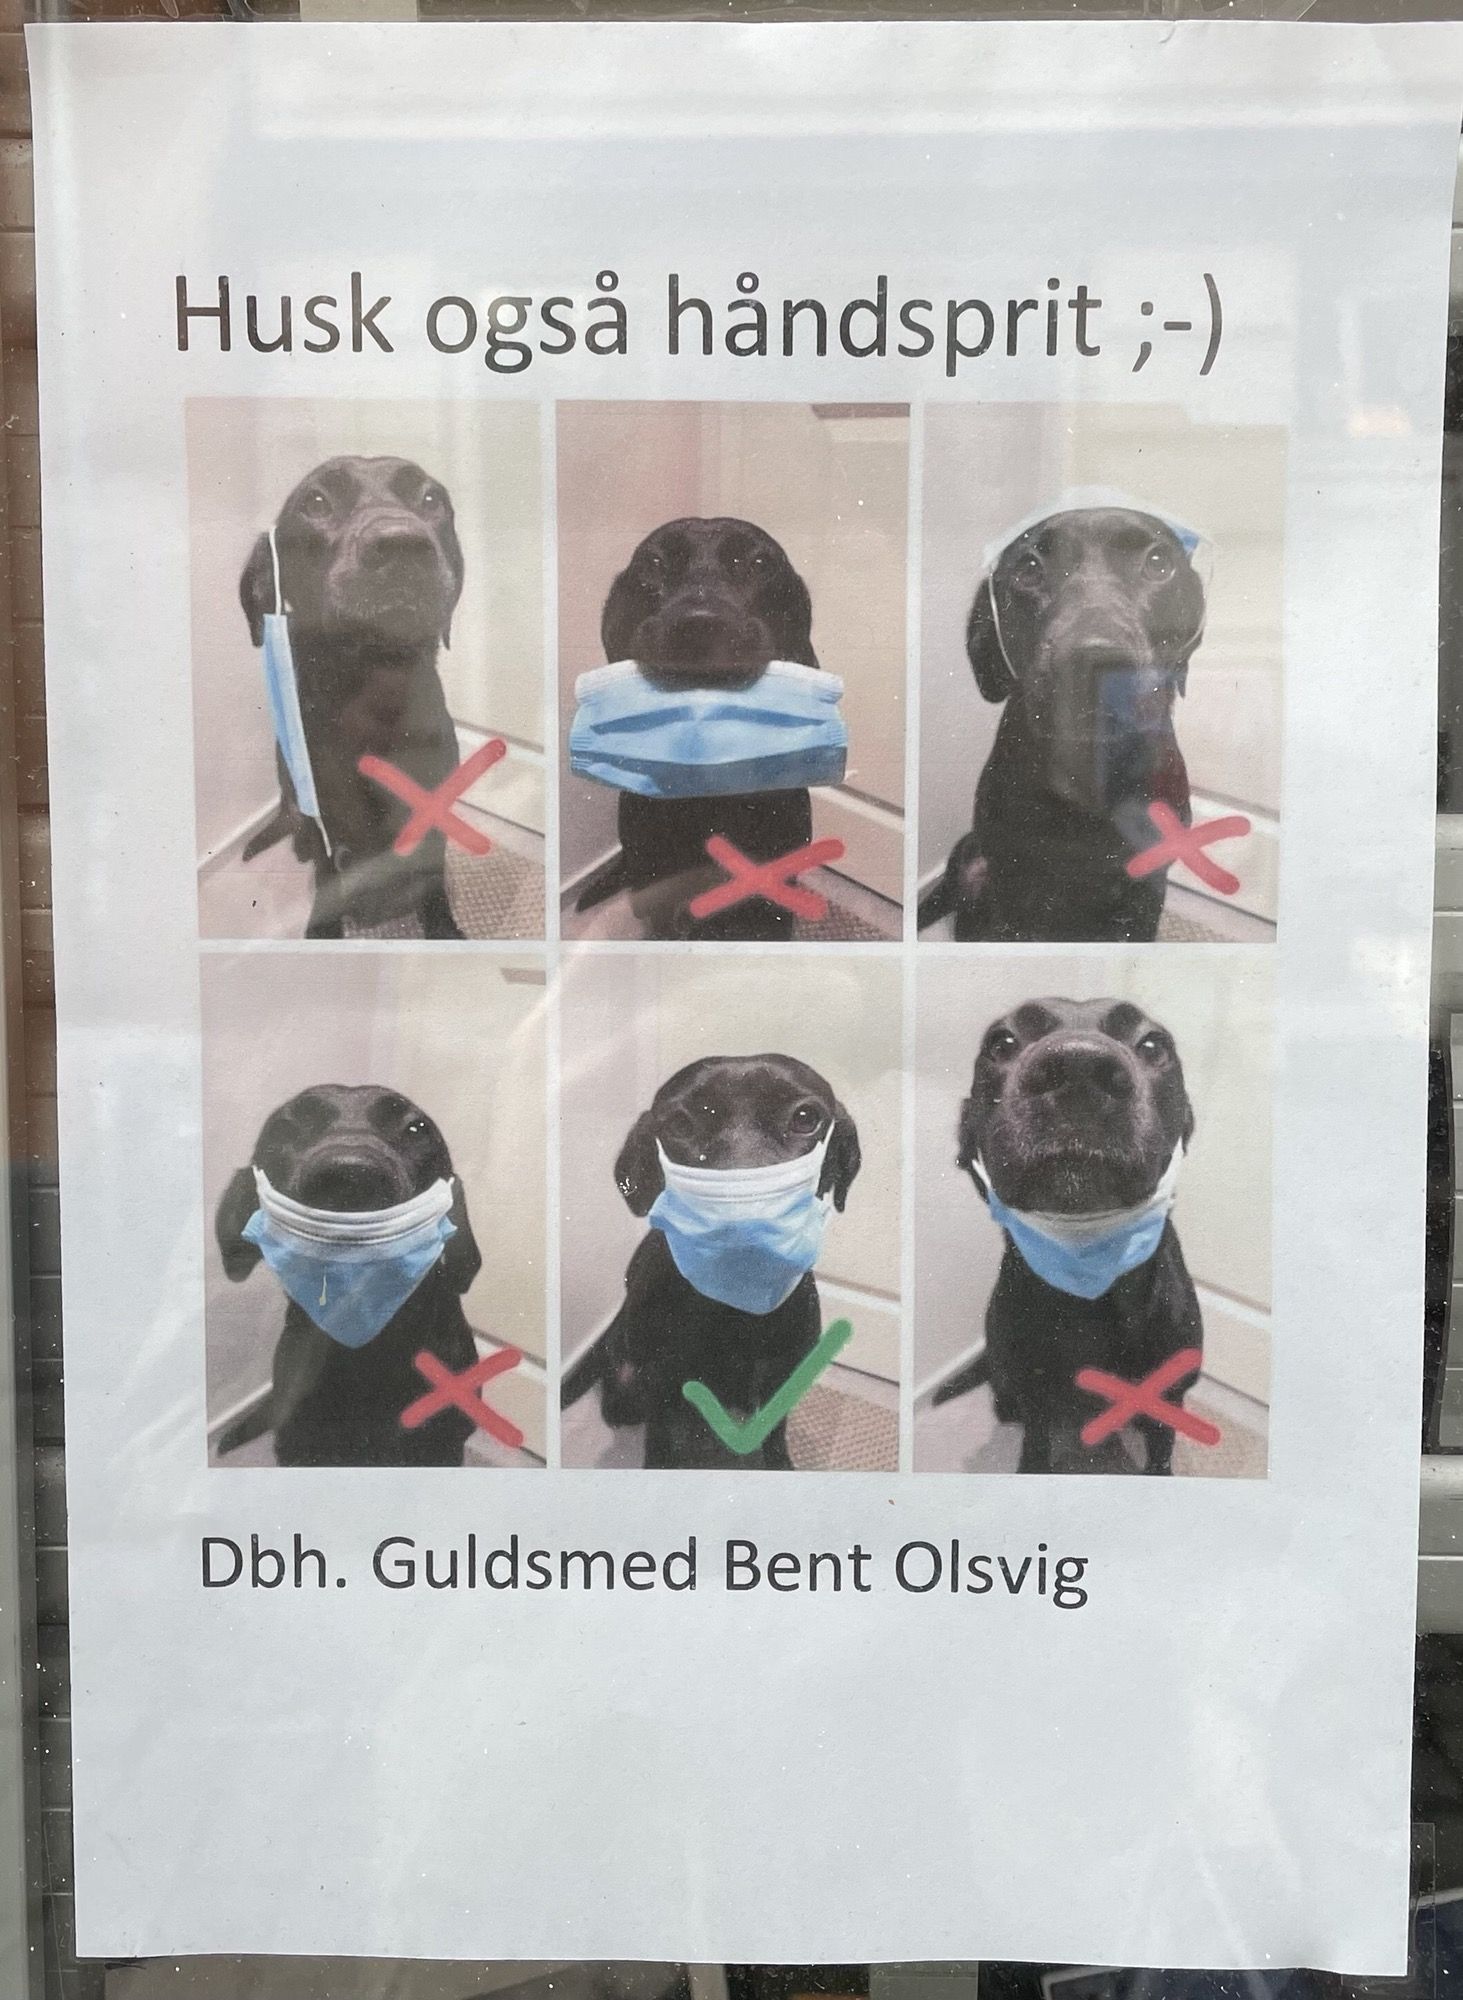 In a storefront in Denmark